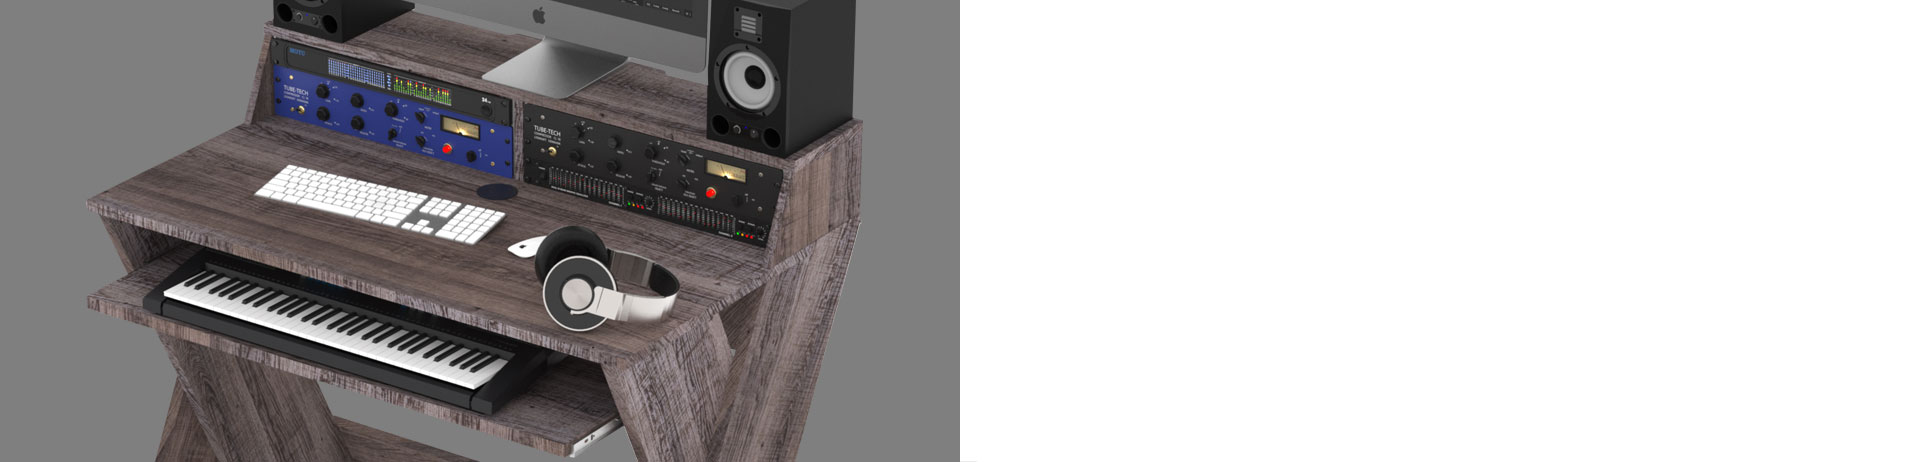 Sound Desk Compact